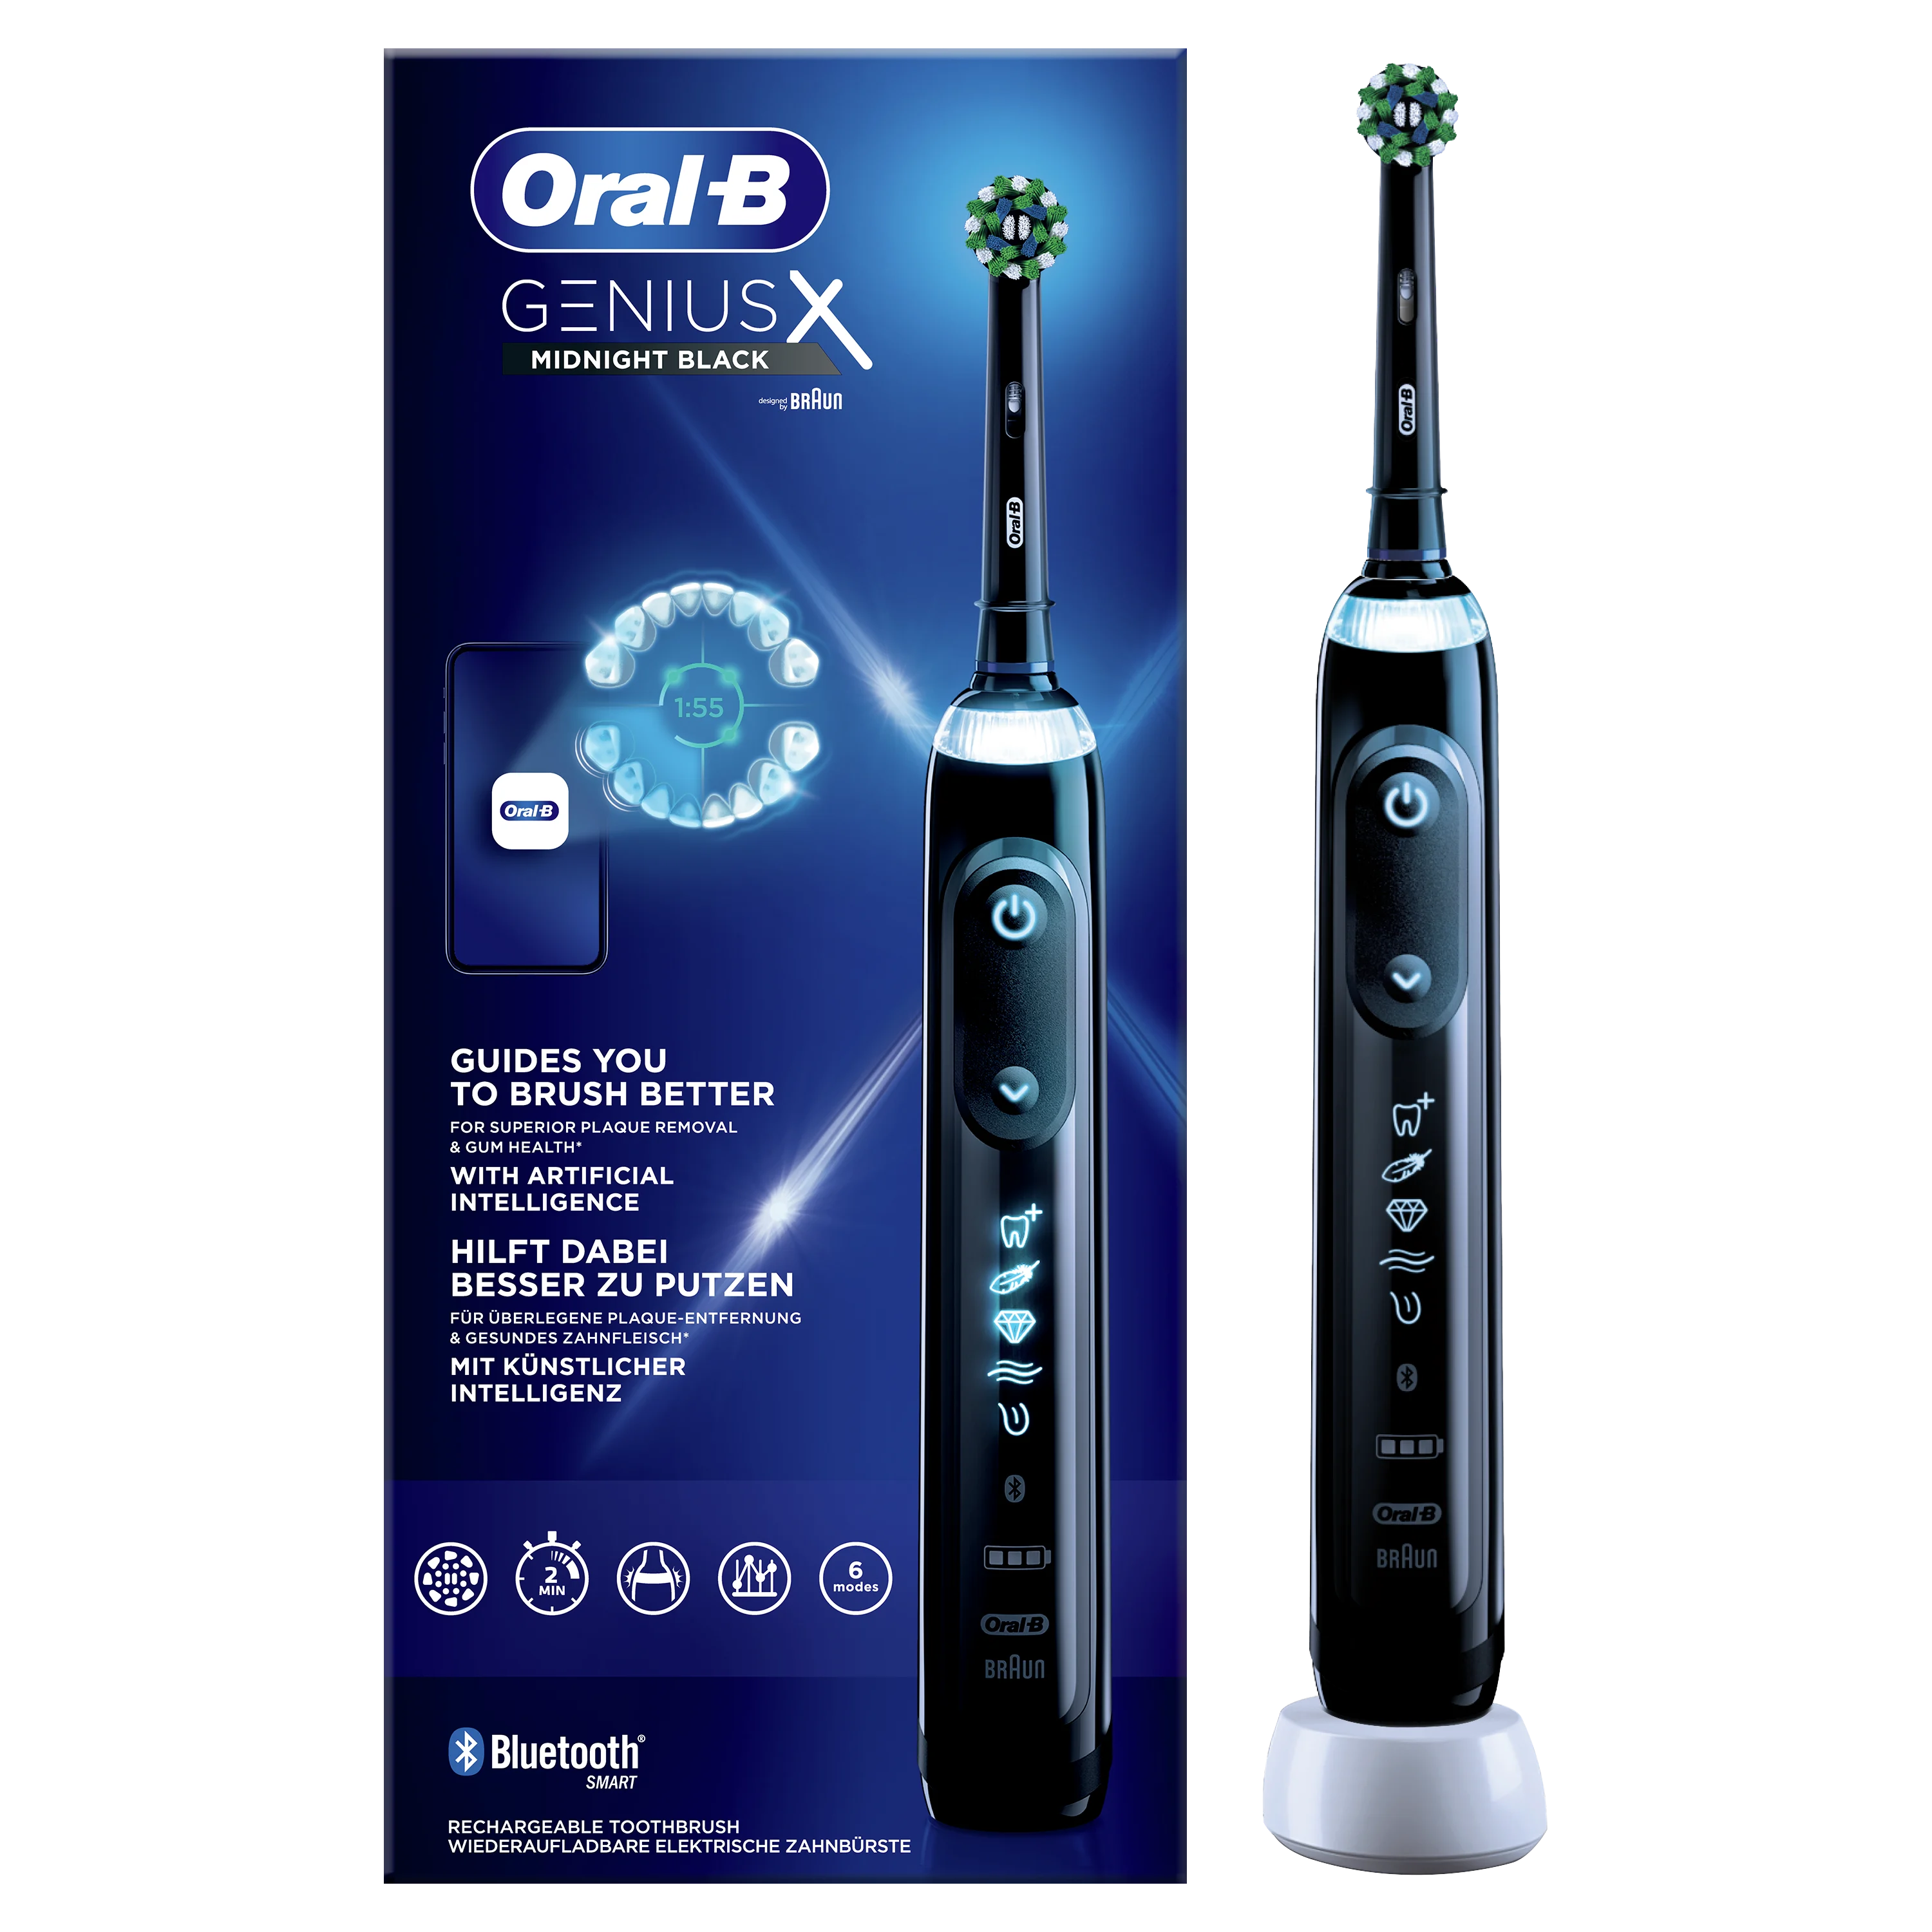 middernacht Behoren Onderdrukking Oral-B Speciale Editie Genius X met Reisetui Elektrische Tandenborstel |  Oral-B